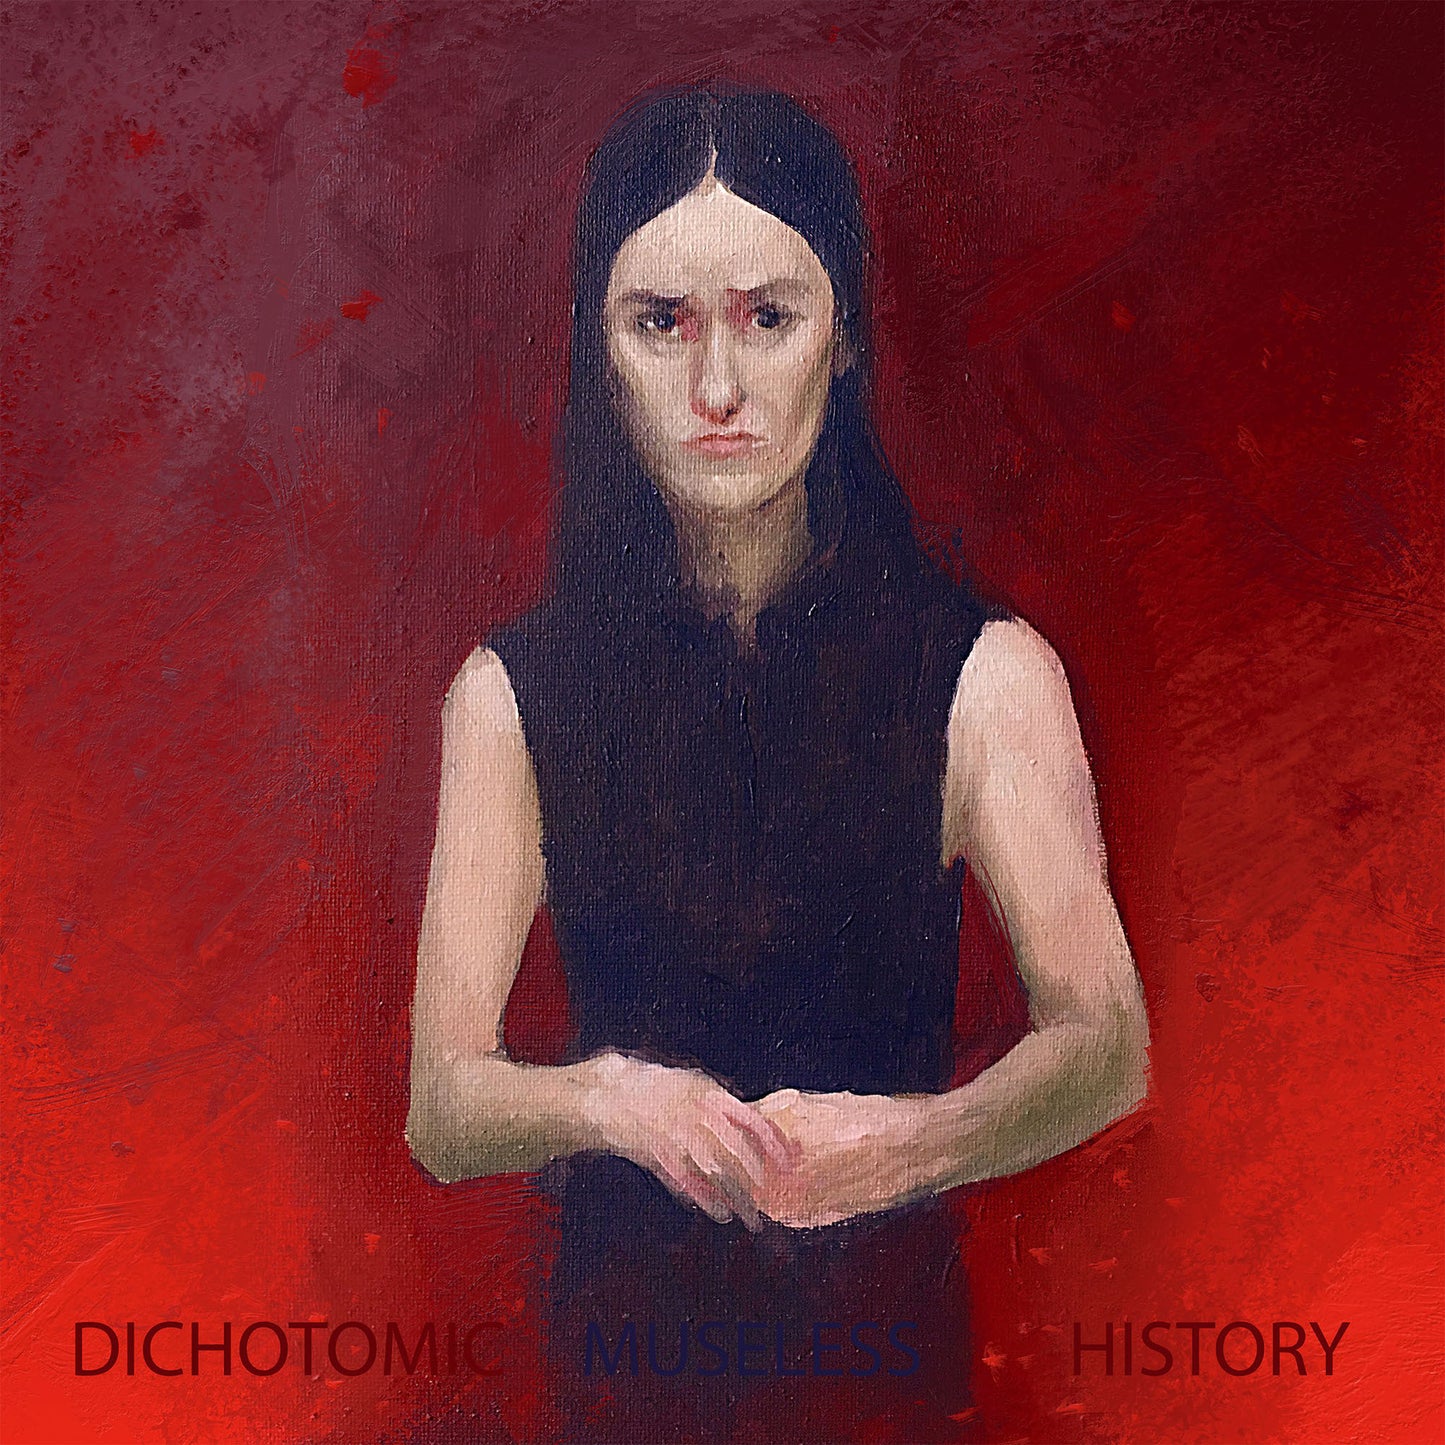 Museless - Dichotomic History CD